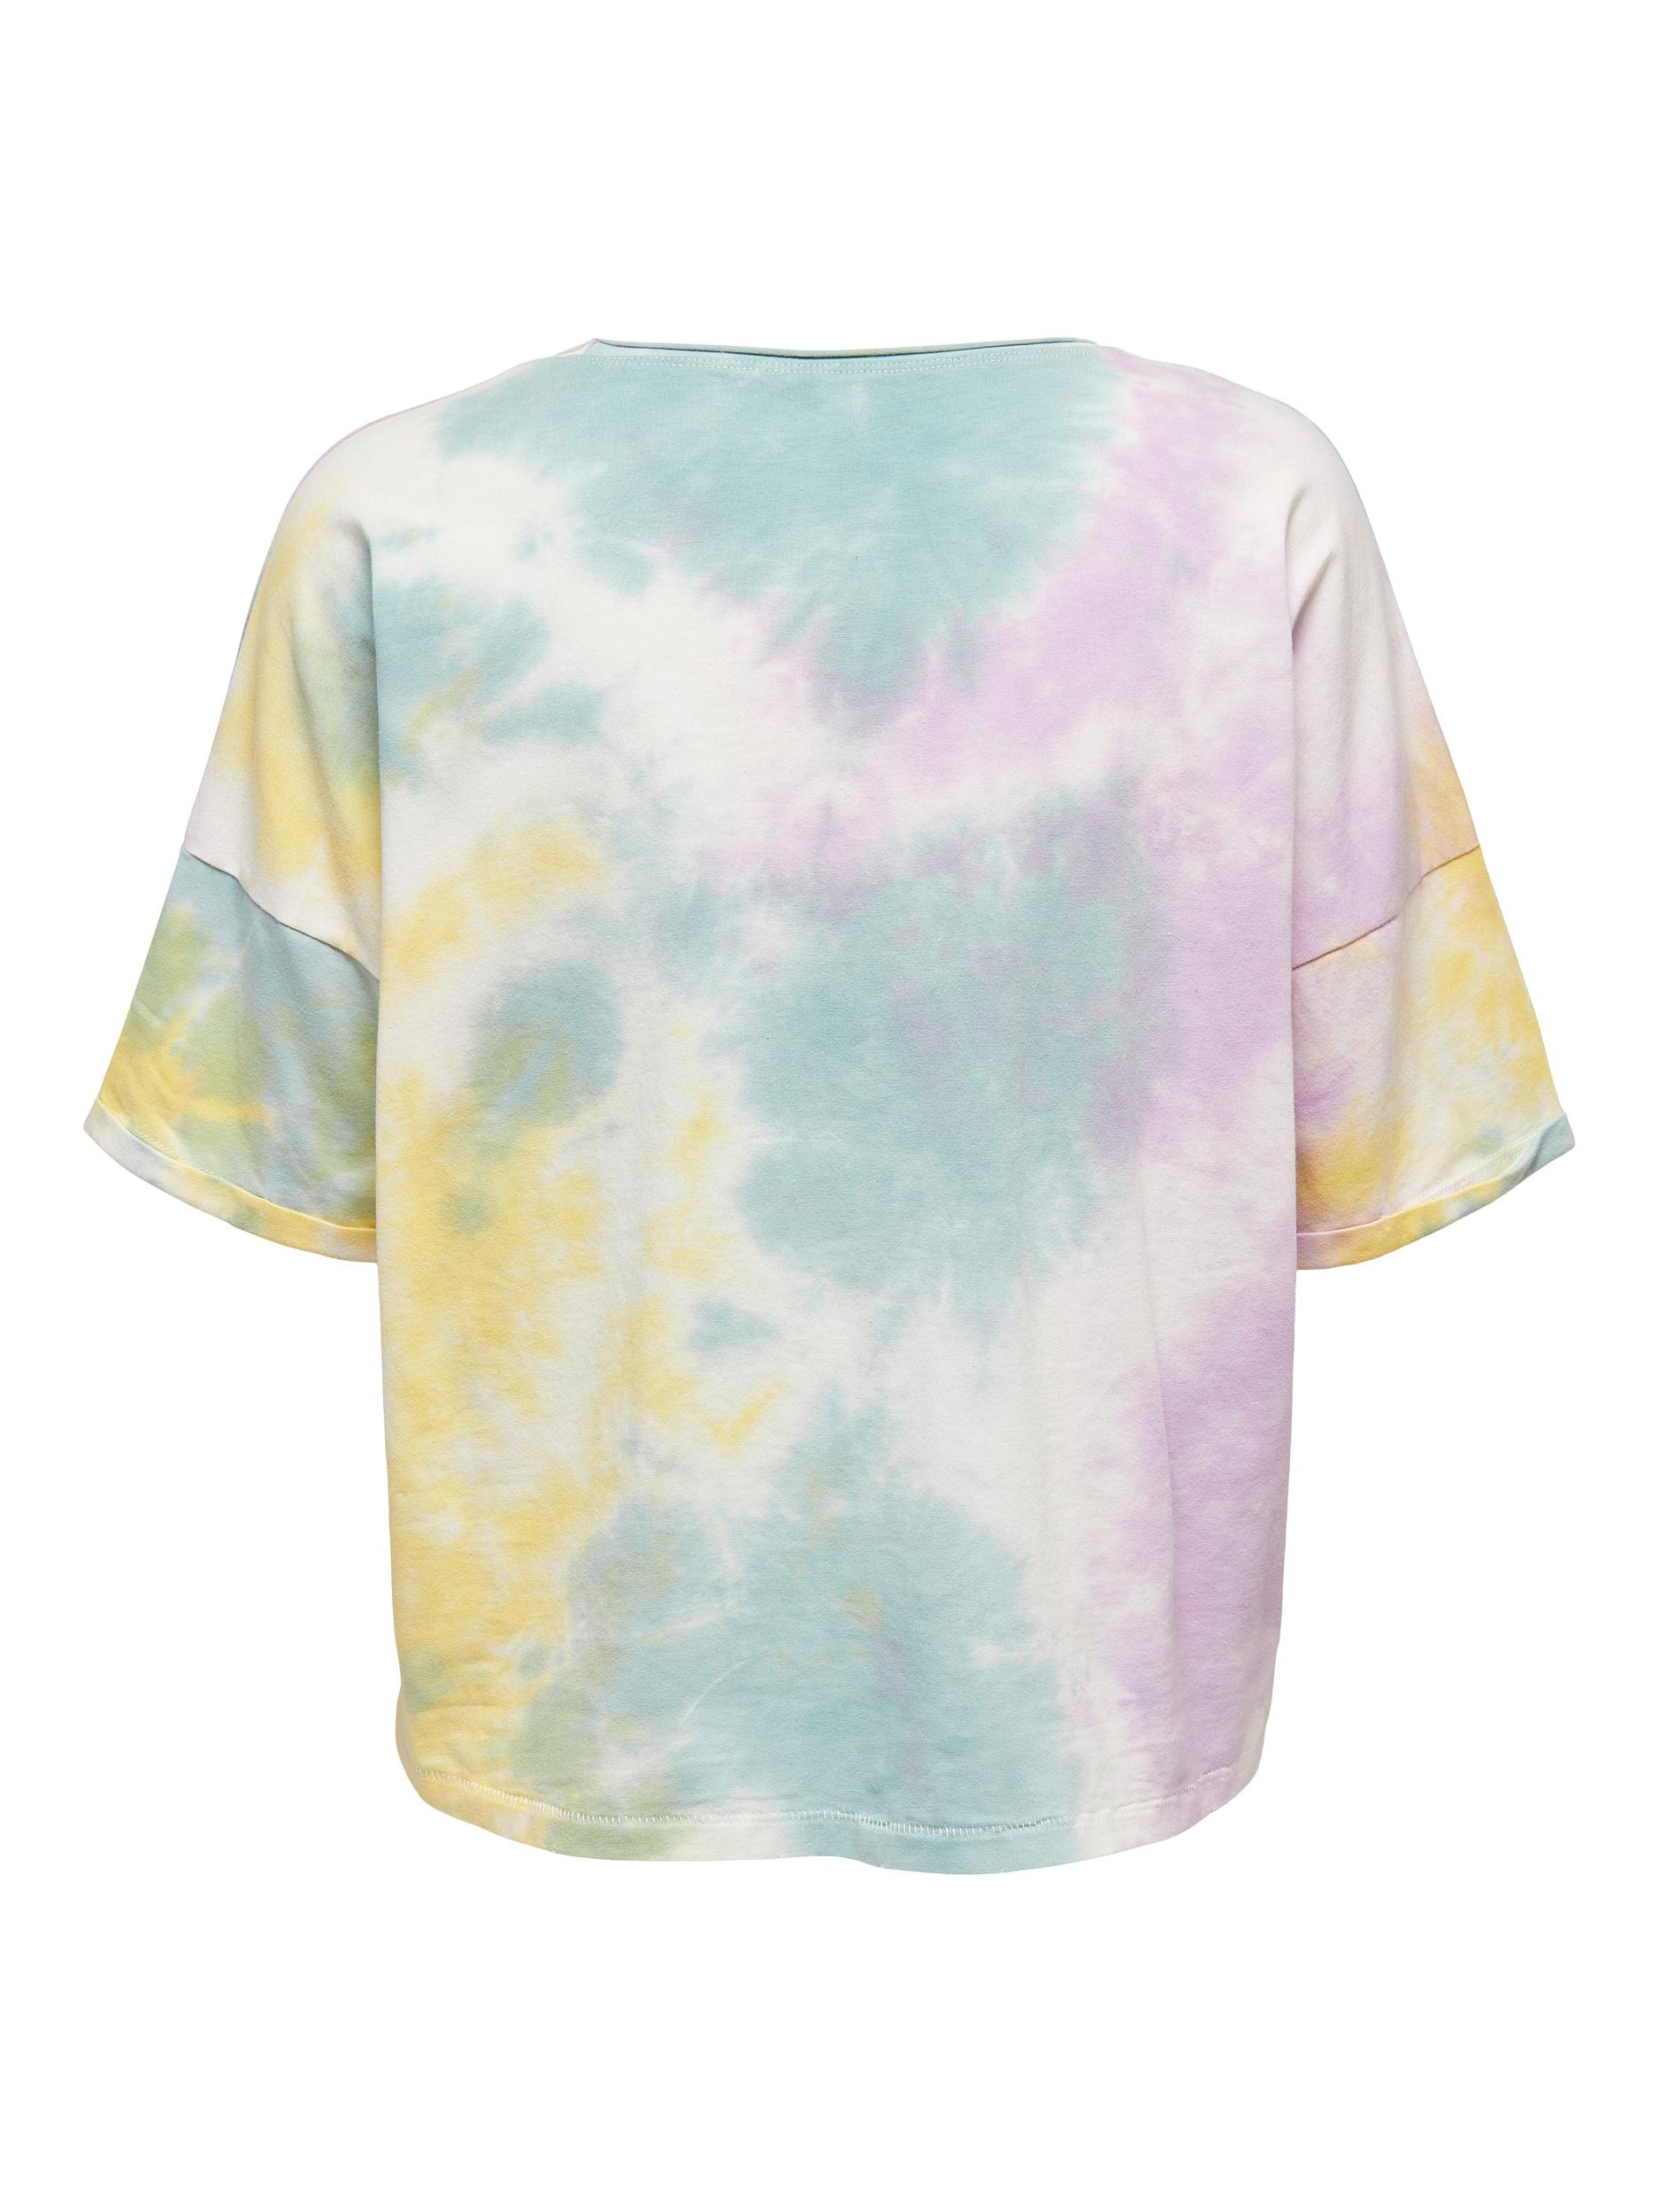 T-shirt con stampa effetto  acquerello, Multicolor, large image number 1